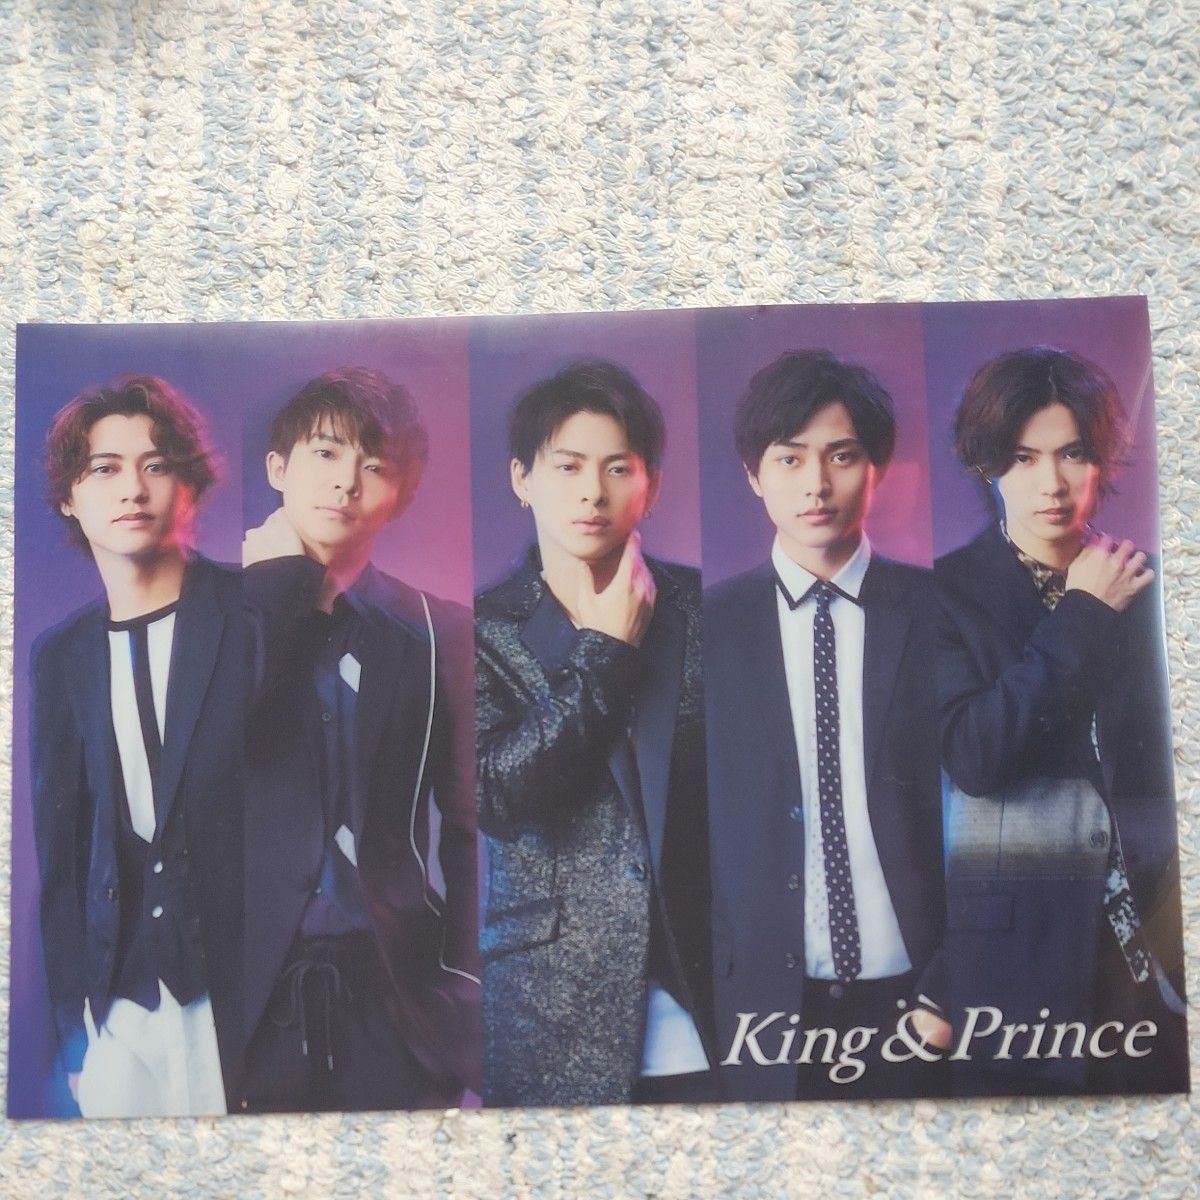 King&Prince MazyNight 初回限定盤Bの先着特典 クリアポスター(A4サイズ)